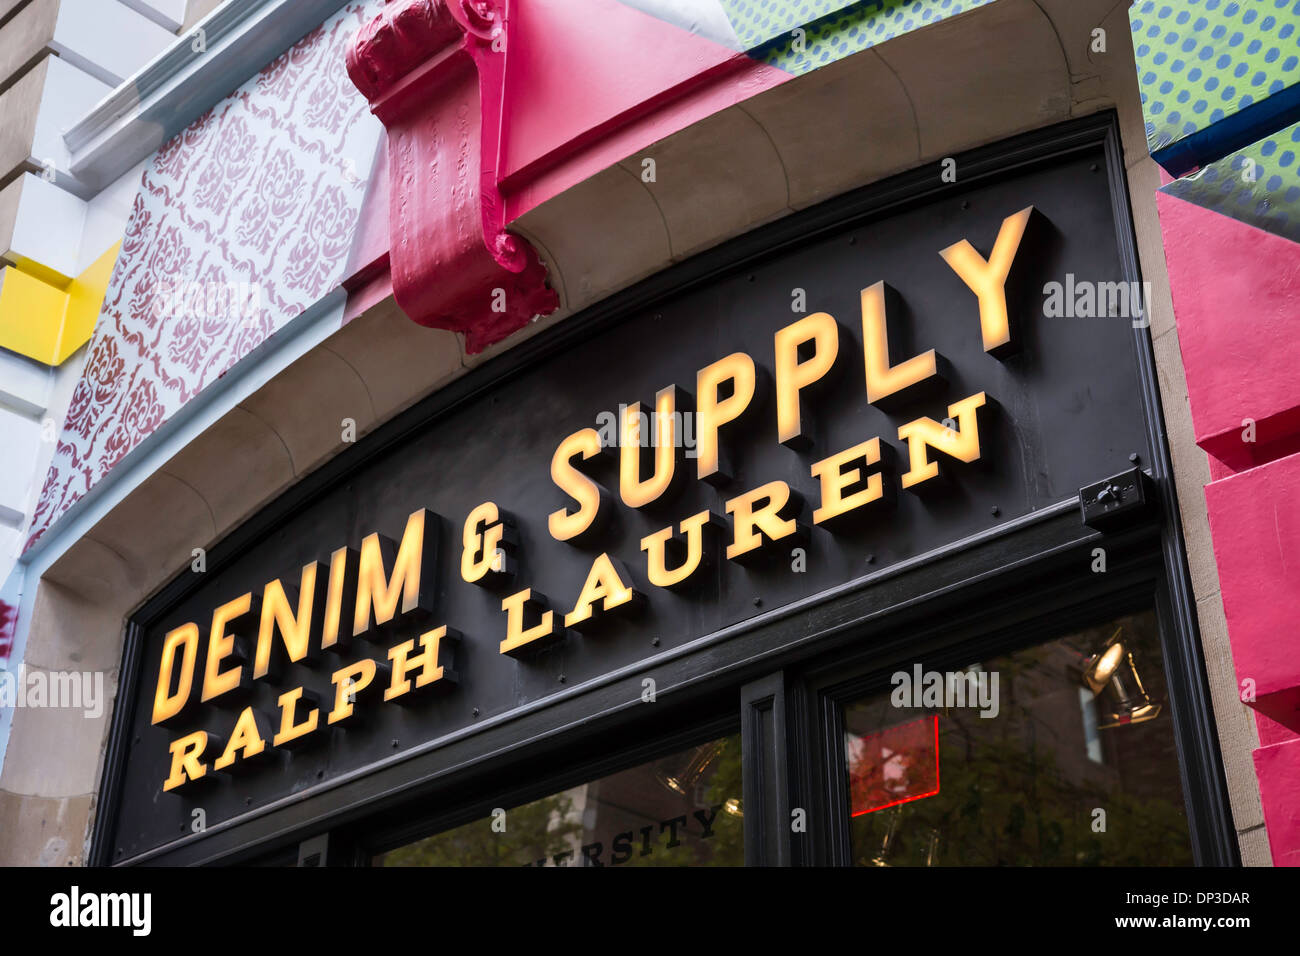 Ralph Lauren - Presenting our NYC Denim & Supply Ralph Lauren location on  University Place